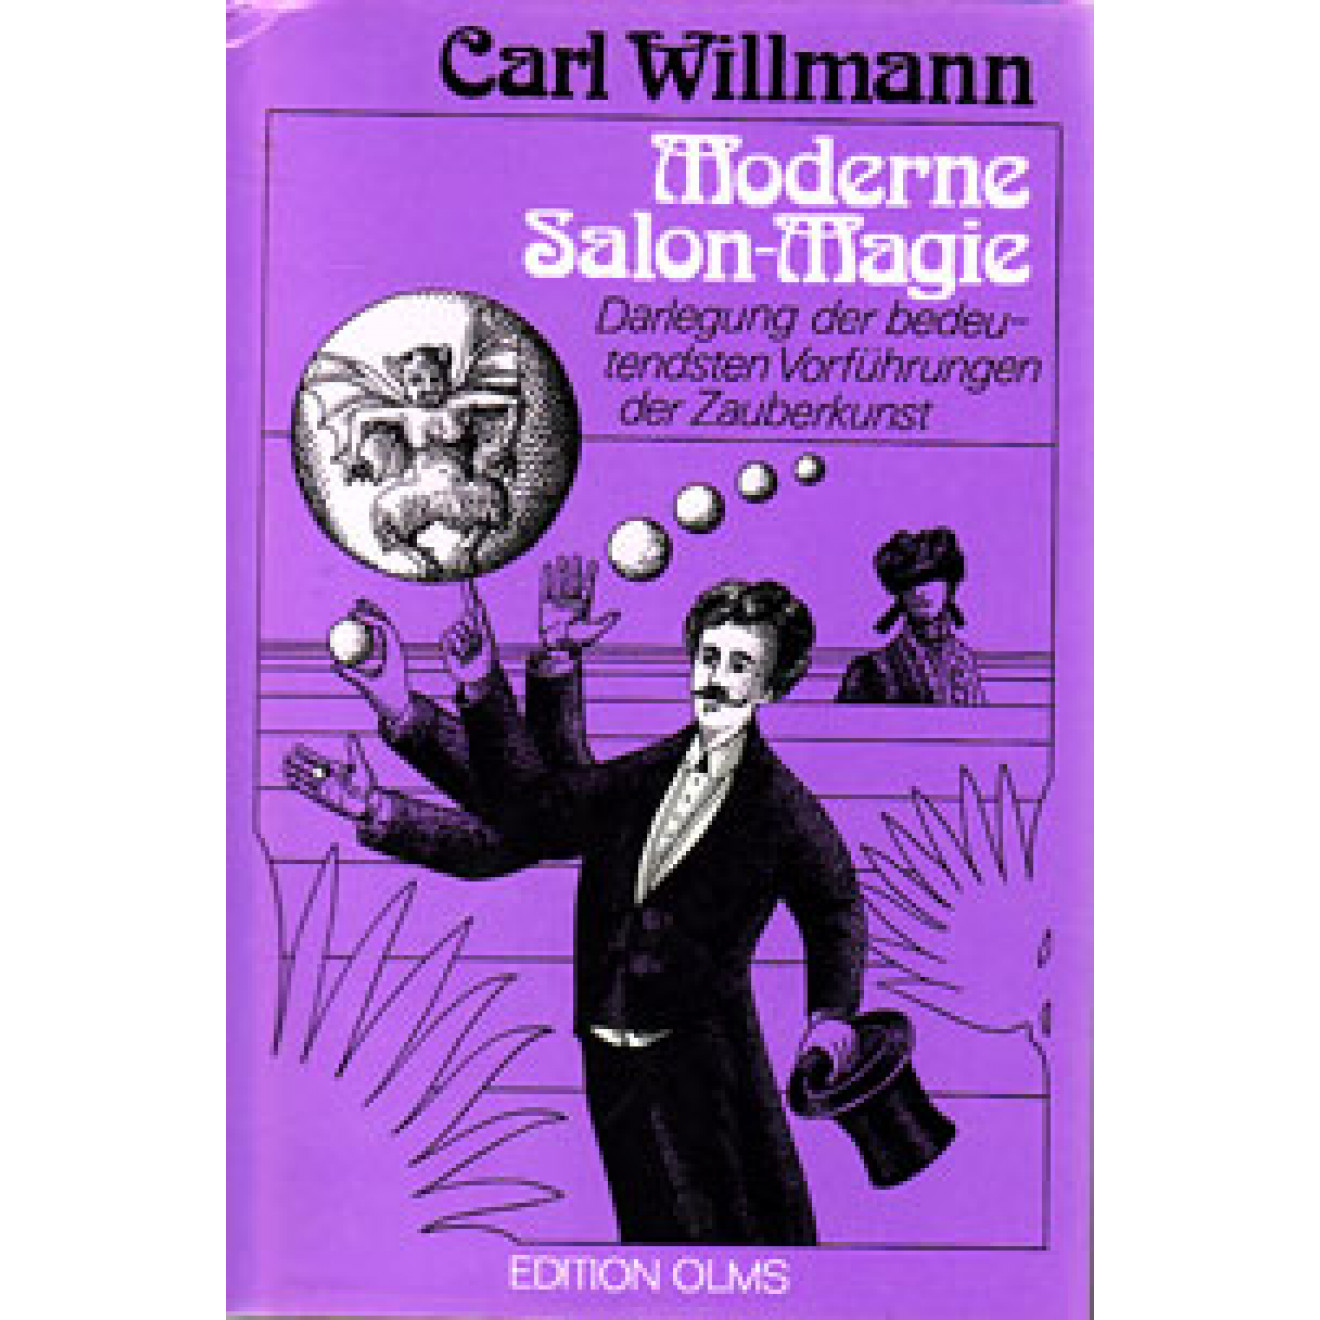 Moderne Salon-Magie (Reprint)